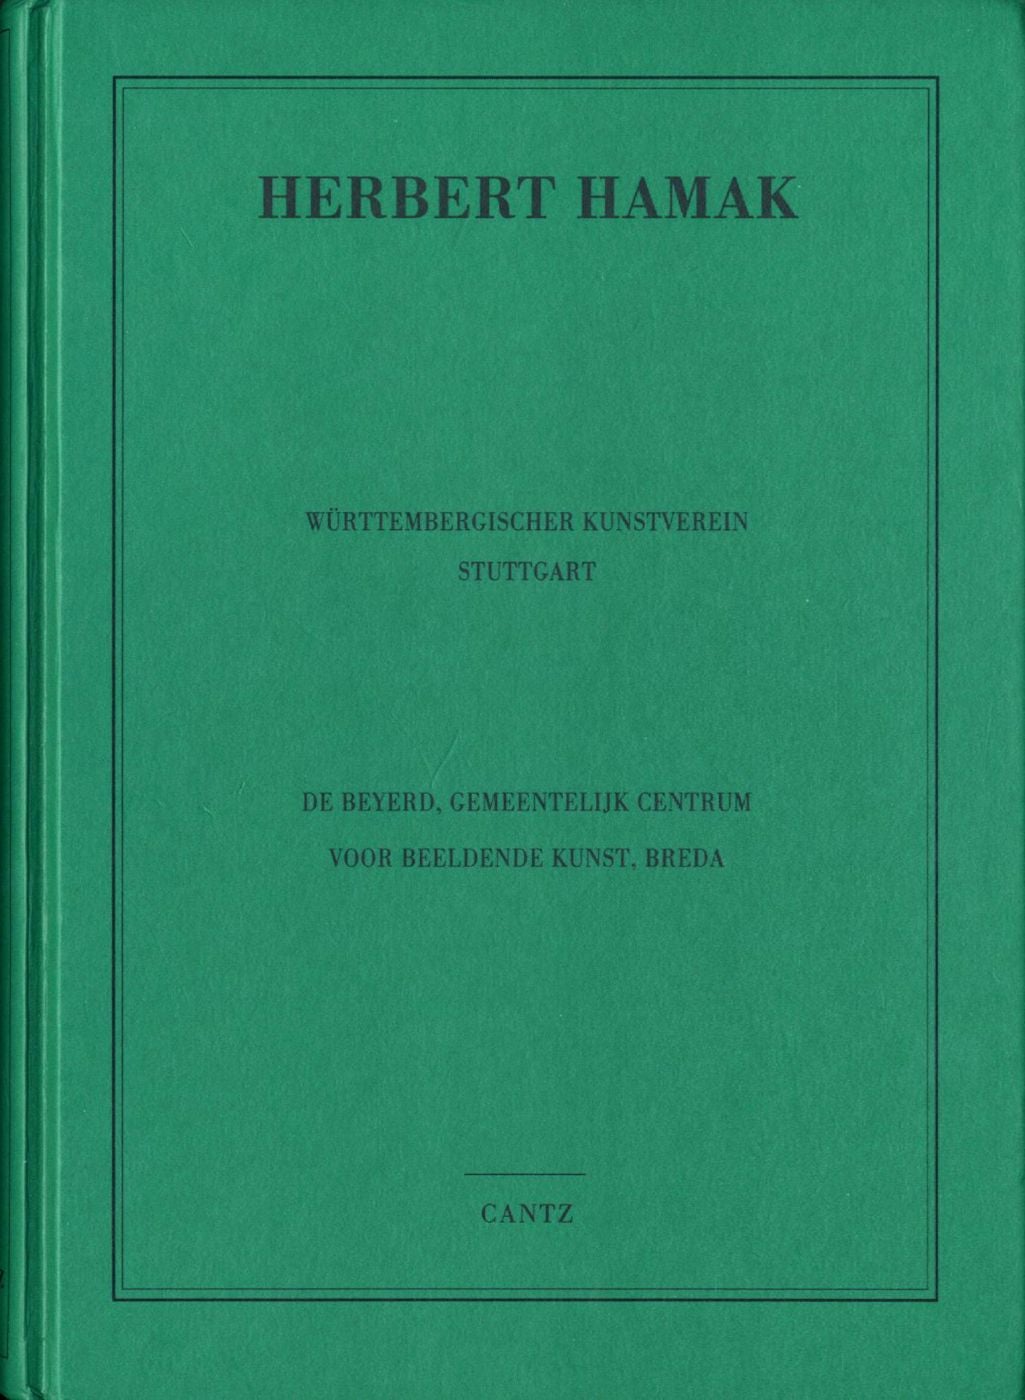 Herbert Hamak (Cantz Verlag)